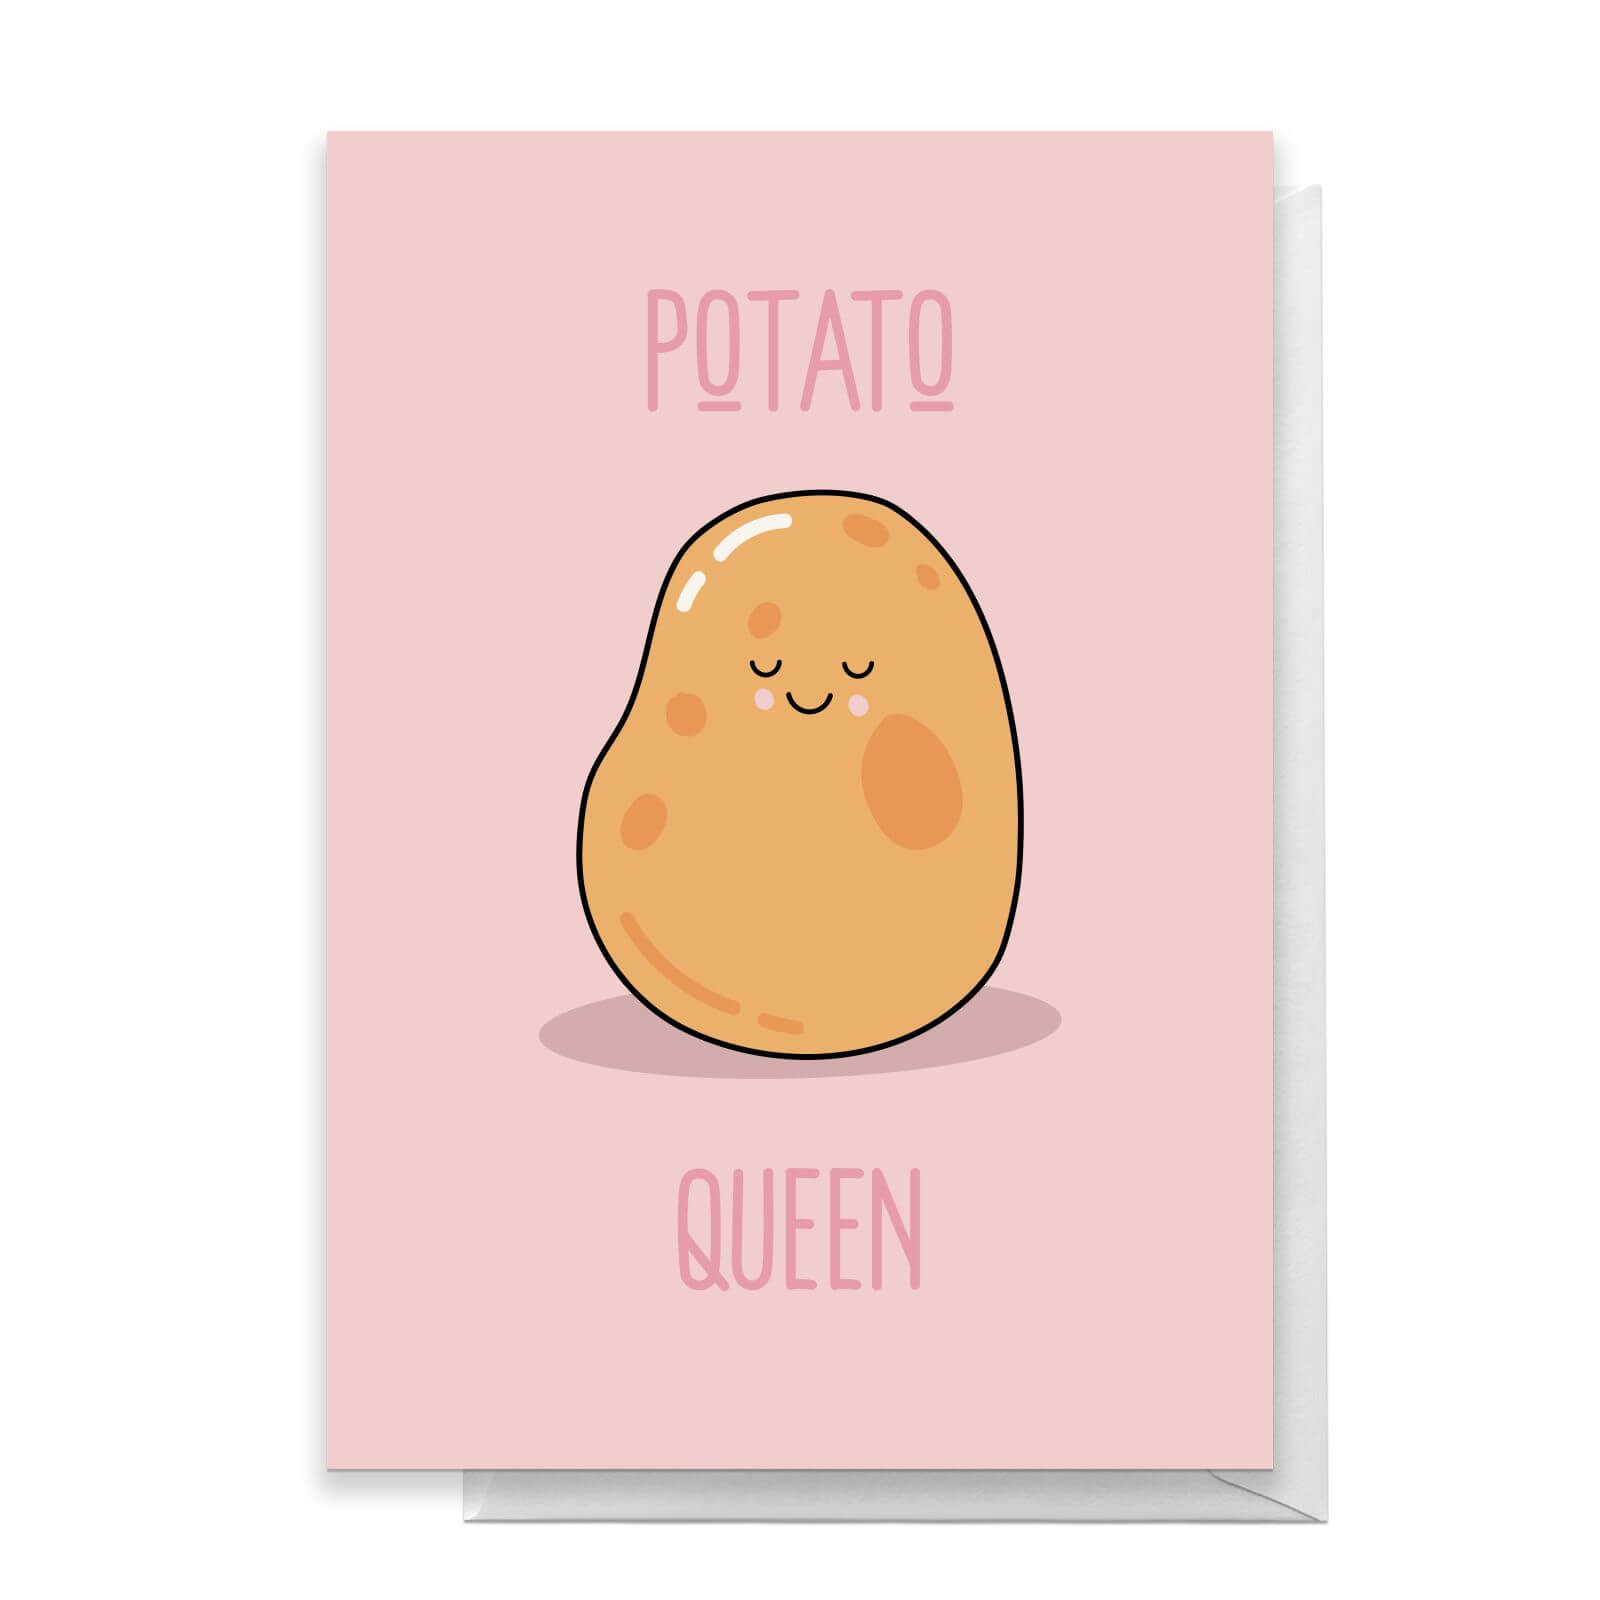 Potato Queen Greetings Card - Standard Card